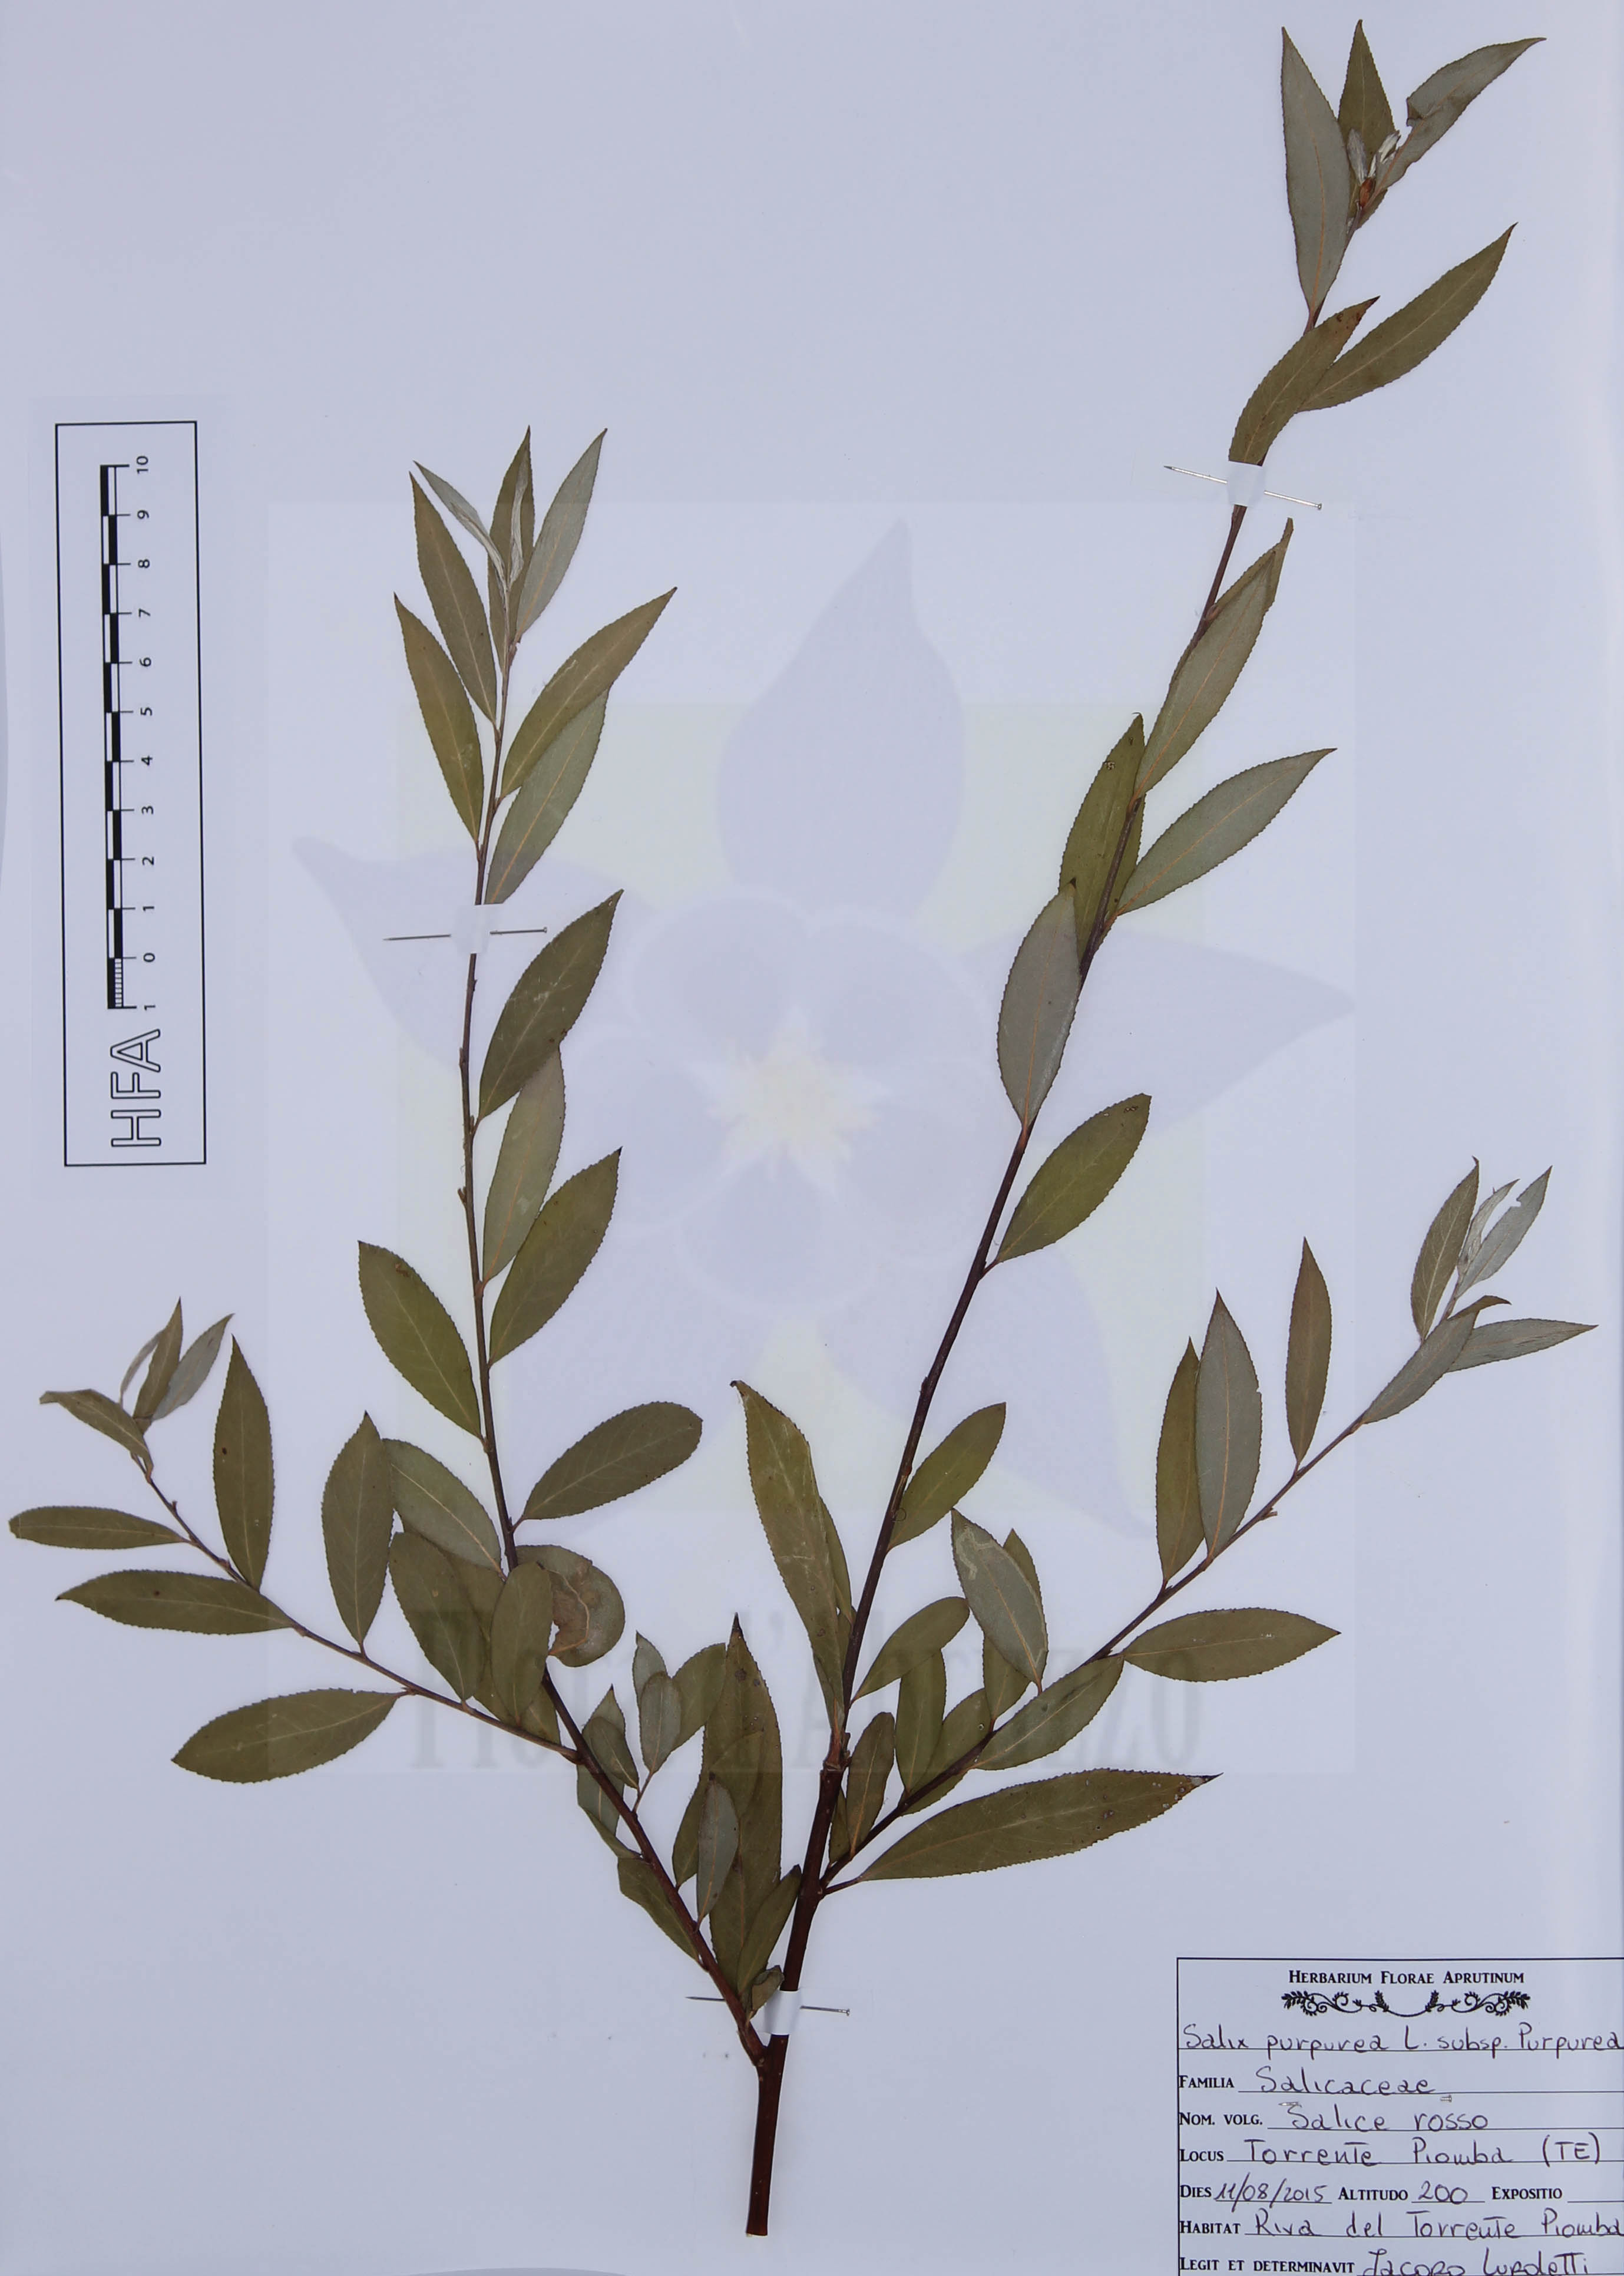 Salix purpurea L. subsp. purpurea